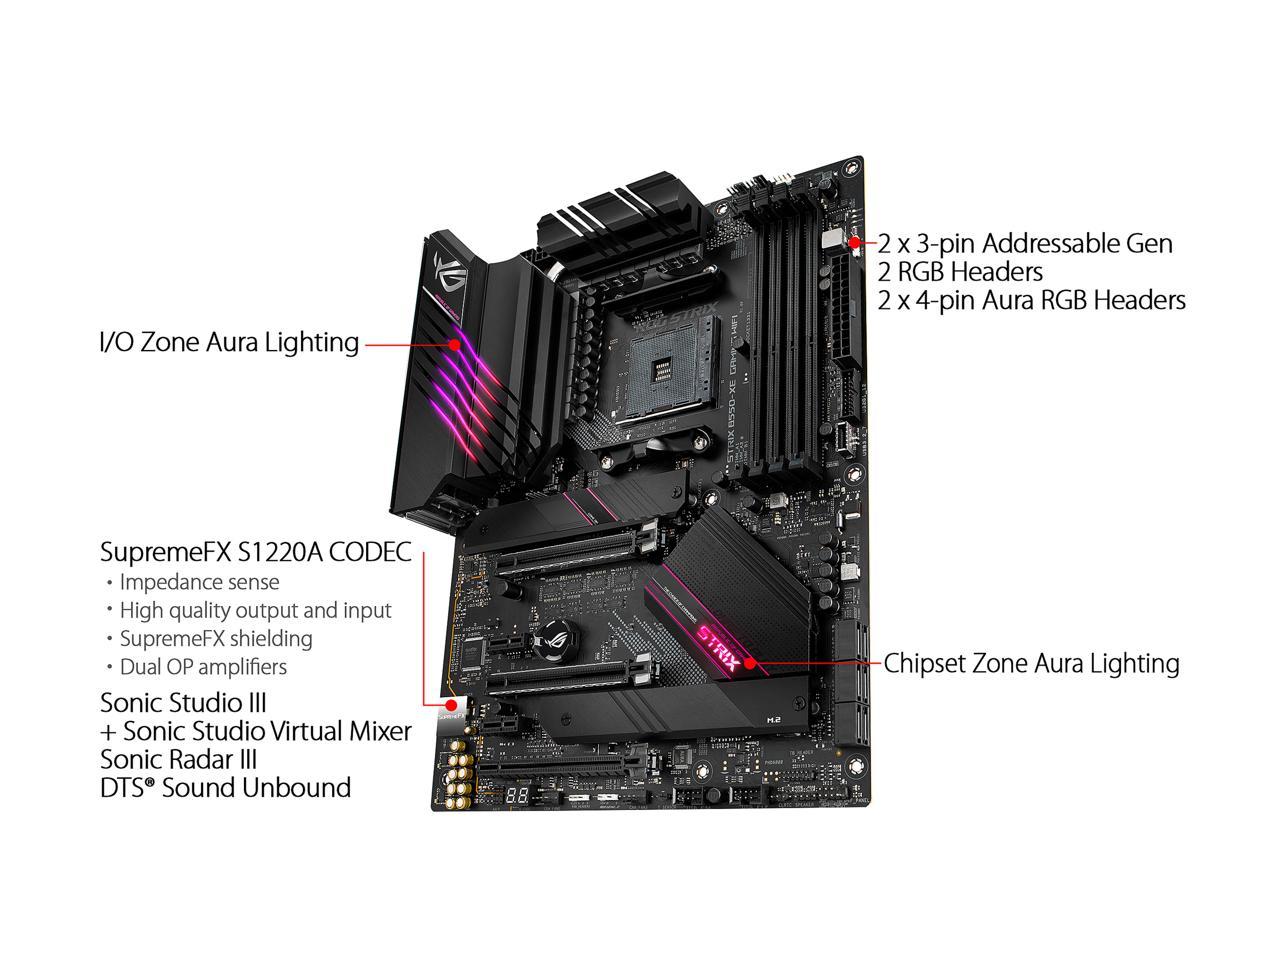 ASUS ROG Strix B550-XE Gaming WiFi AMD AM4 (Zen 3/3rd Gen Ryzen) ATX Gaming Motherboard (PCIe 4.0, WiFi 6, 2.5Gb LAN, 16 (90A) Power Stages, Bundled ASUS Hyper M.2 x16 Gen 4 Card, Addressable Gen 2 RGB and AURA Sync)